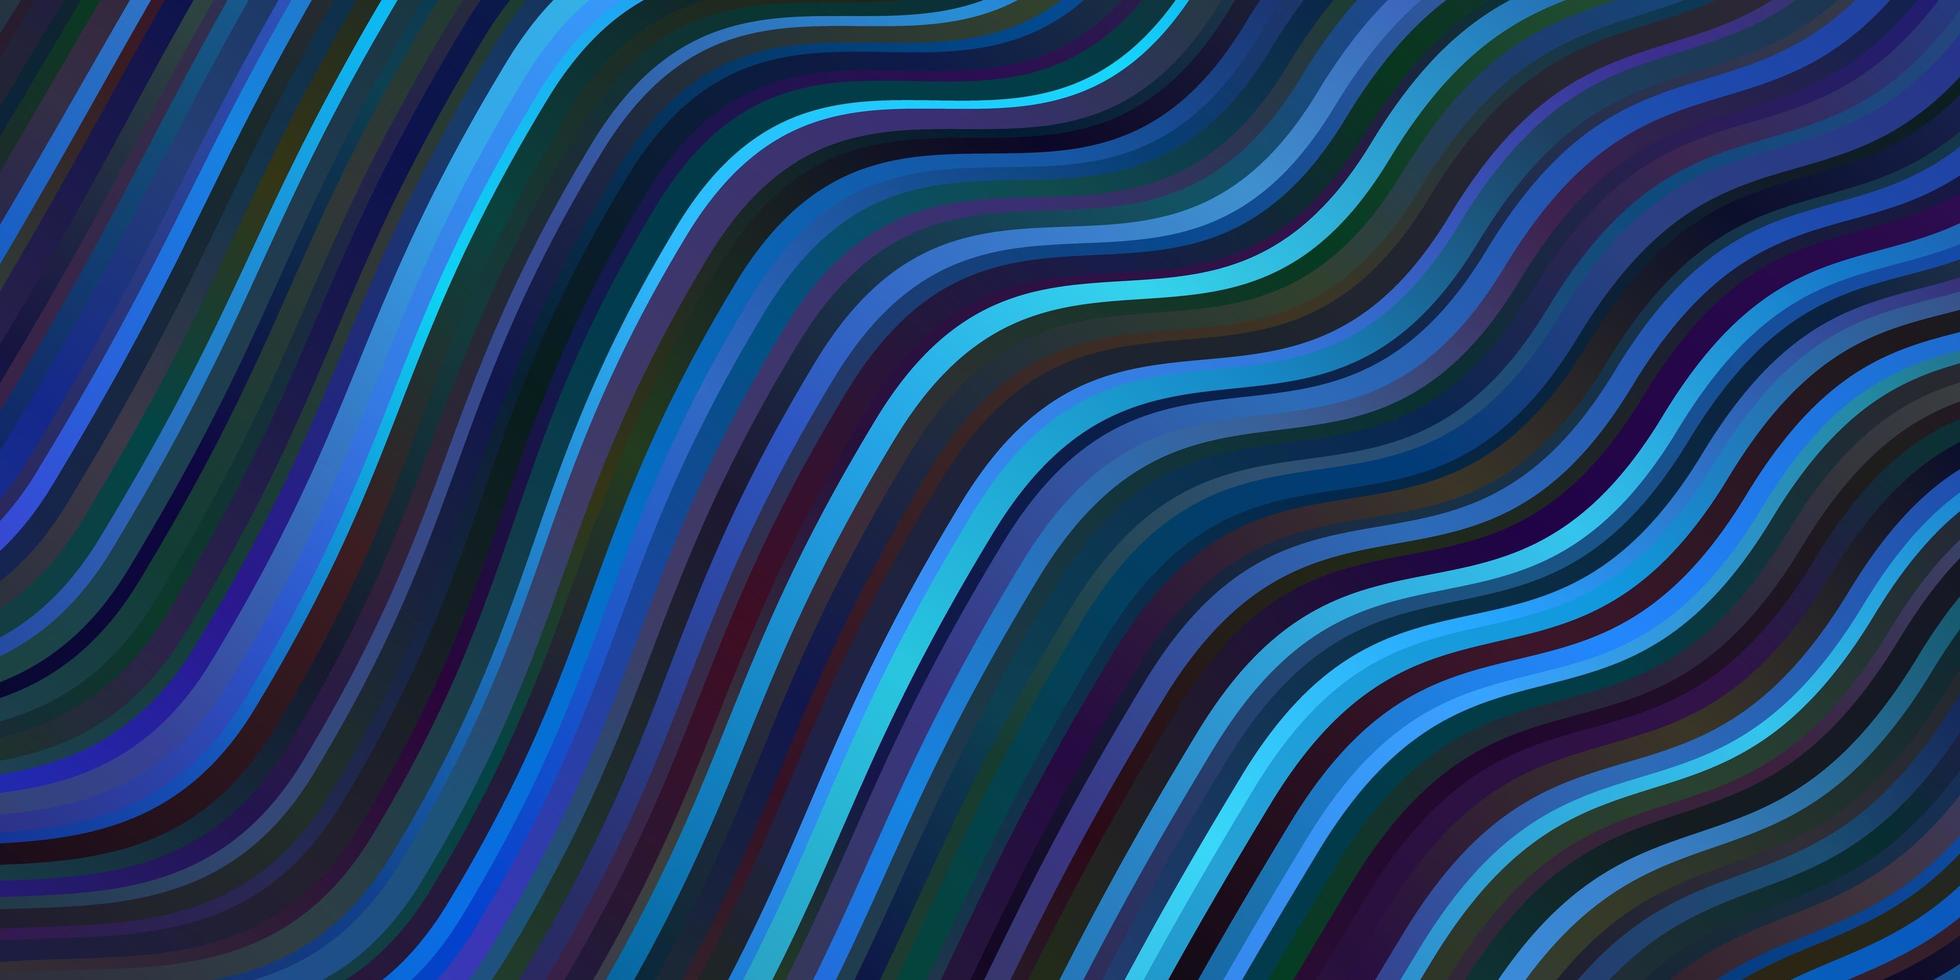 Dark BLUE vector background with bent lines